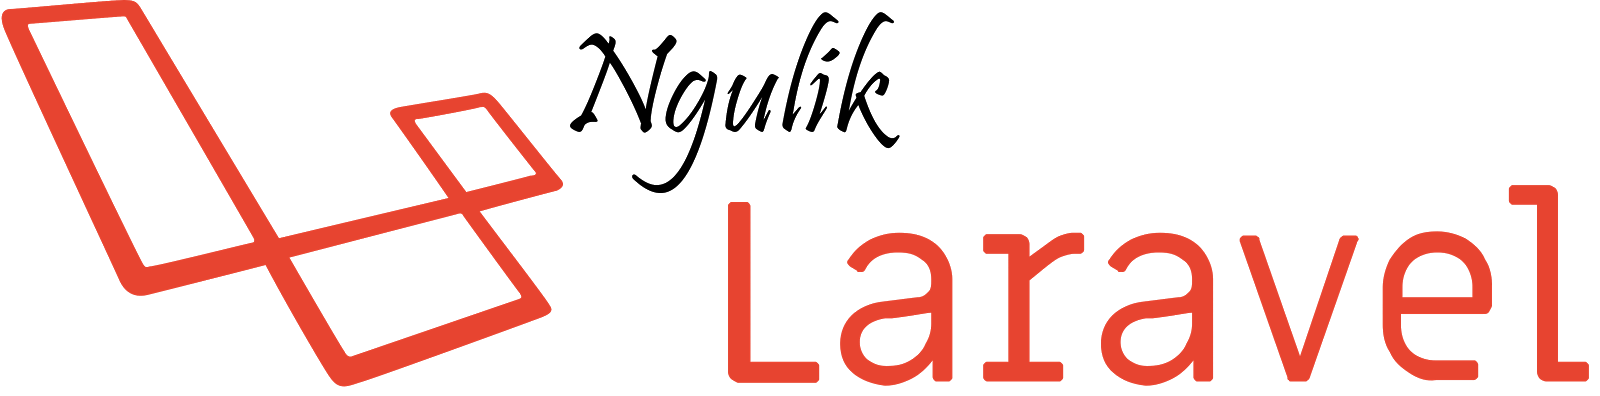 Tutorial dan Project PHP Framework Laravel